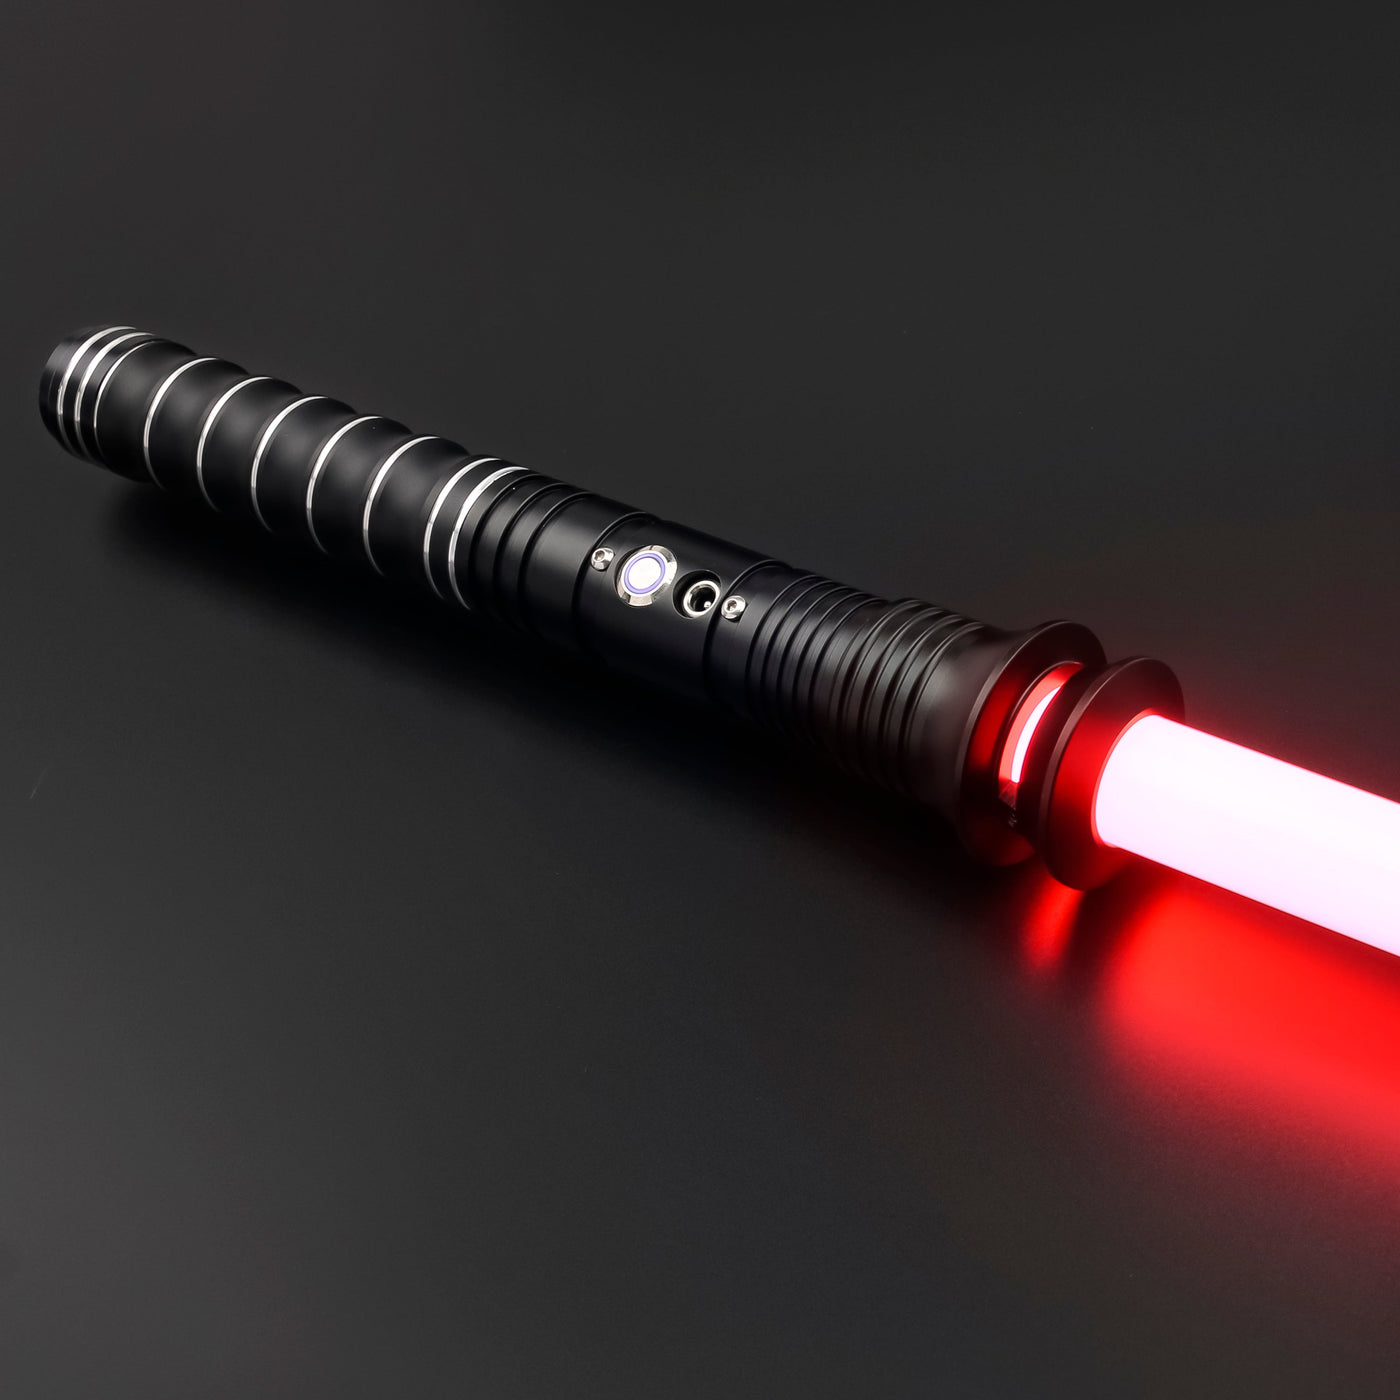 Discipulis - KenJo Sabers - Premium RGB Base Lit - Star Wars Lightsaber replica Jedi Sith - Best sabershop Europe - Nederland light sabers kopen -